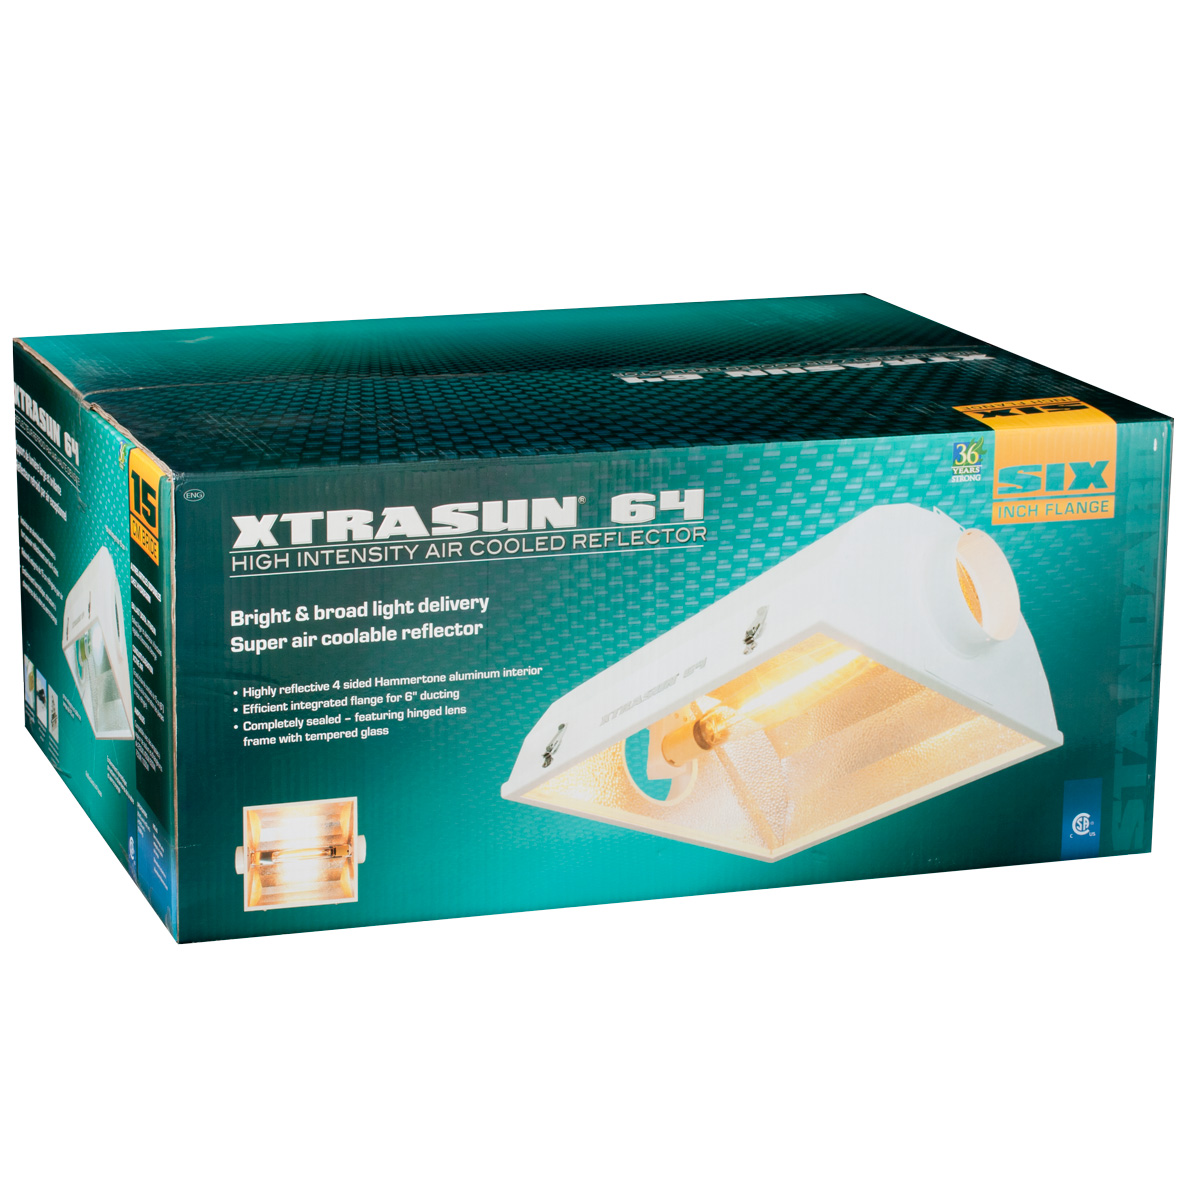 Xtrasun 64 6" Air Cooled Reflector